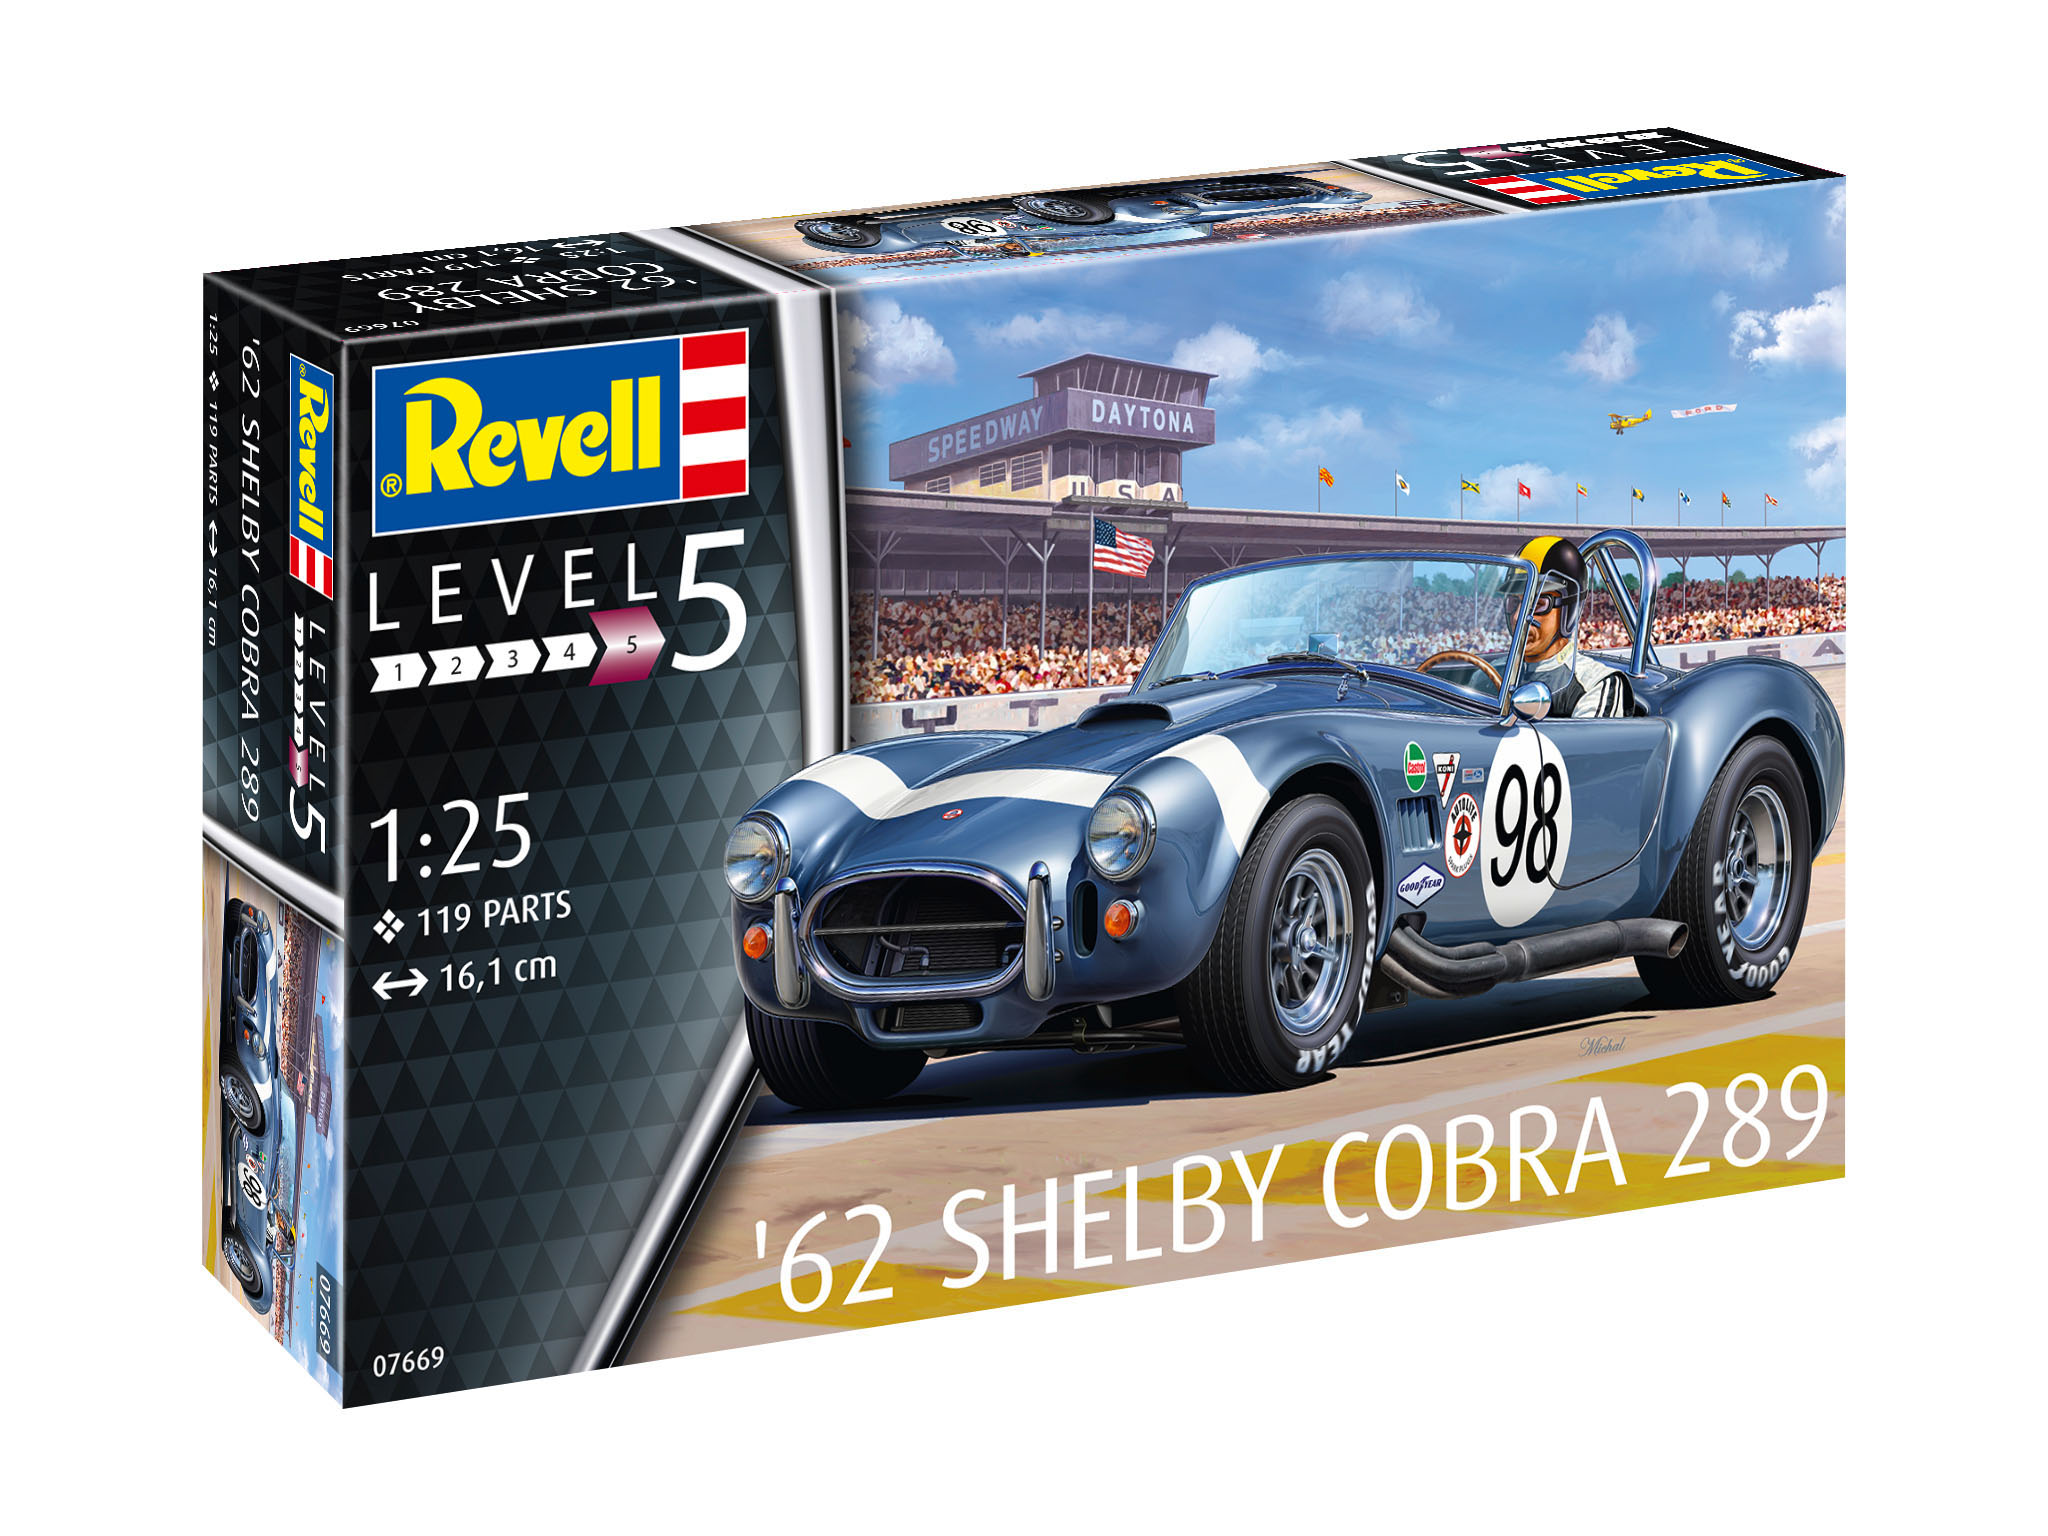 ´62 Shelby Cobra 289 - 07669